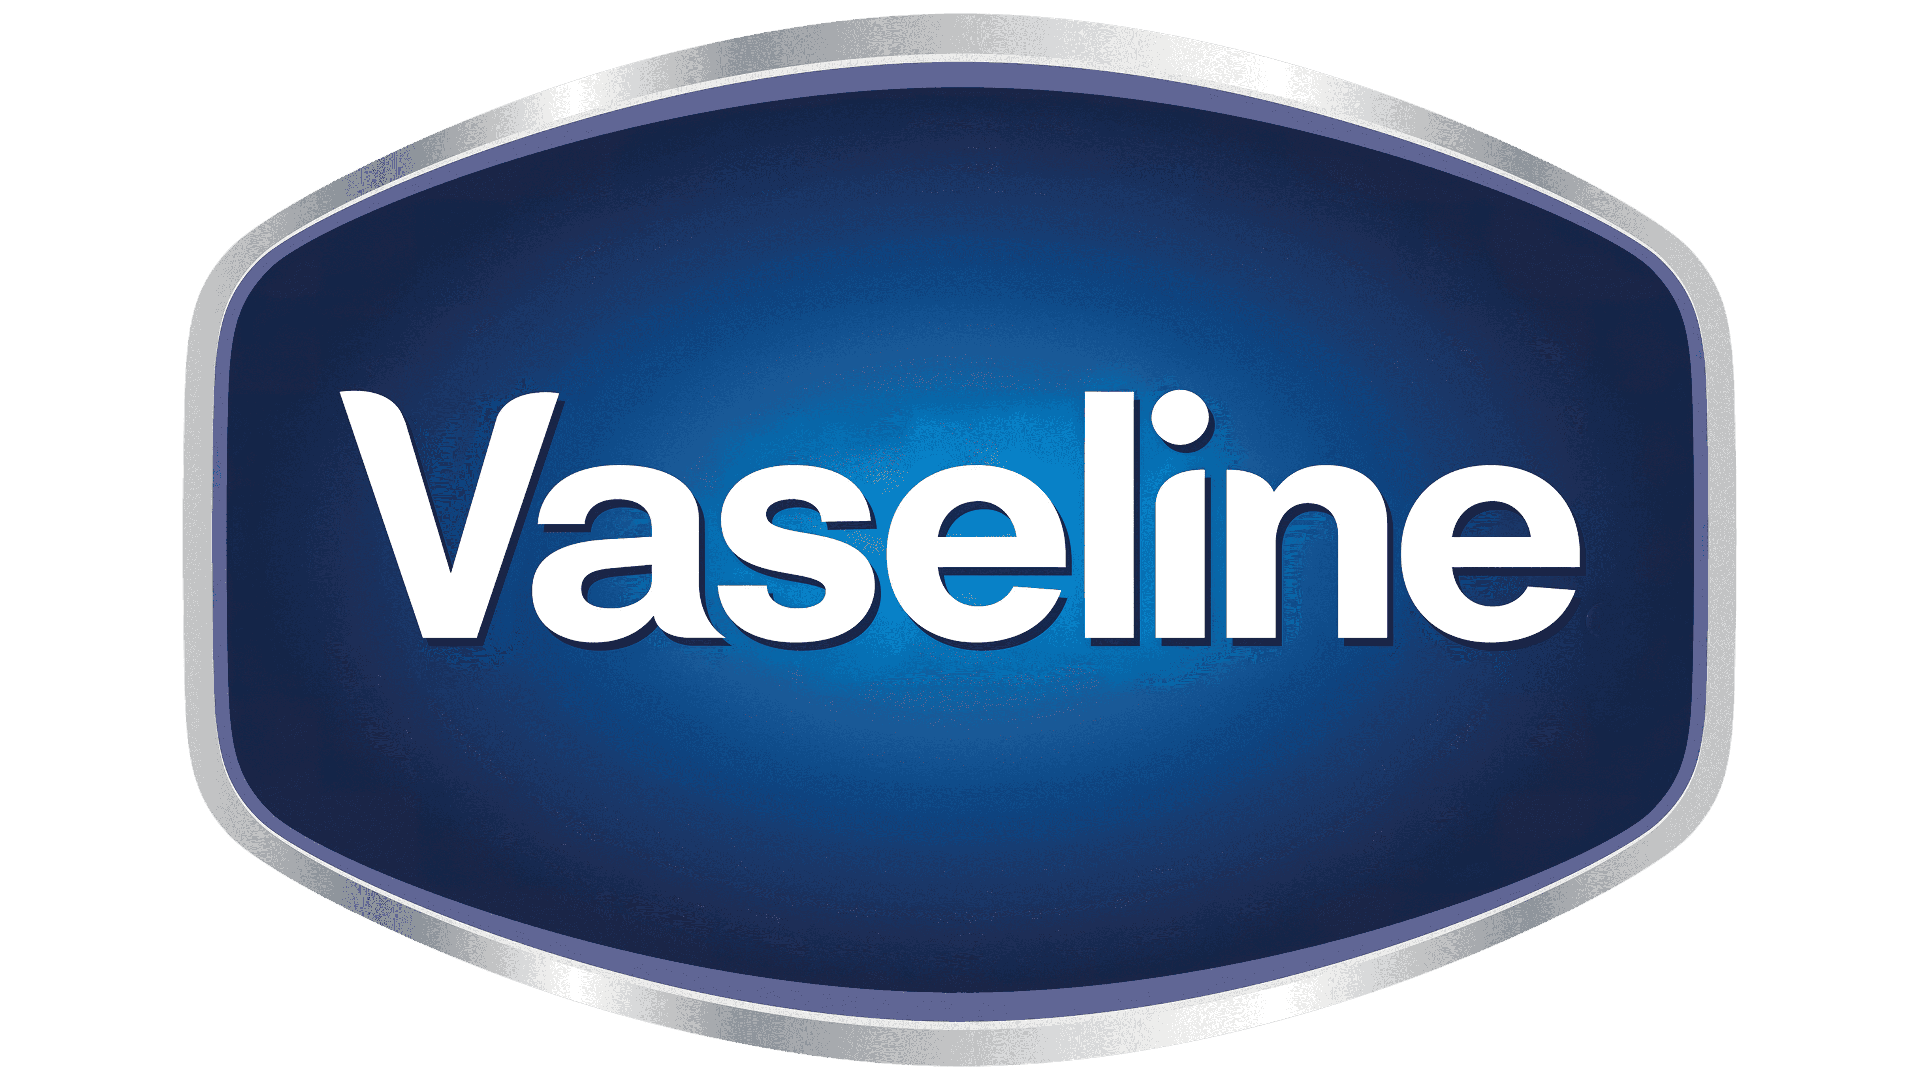 Brand: Vaseline